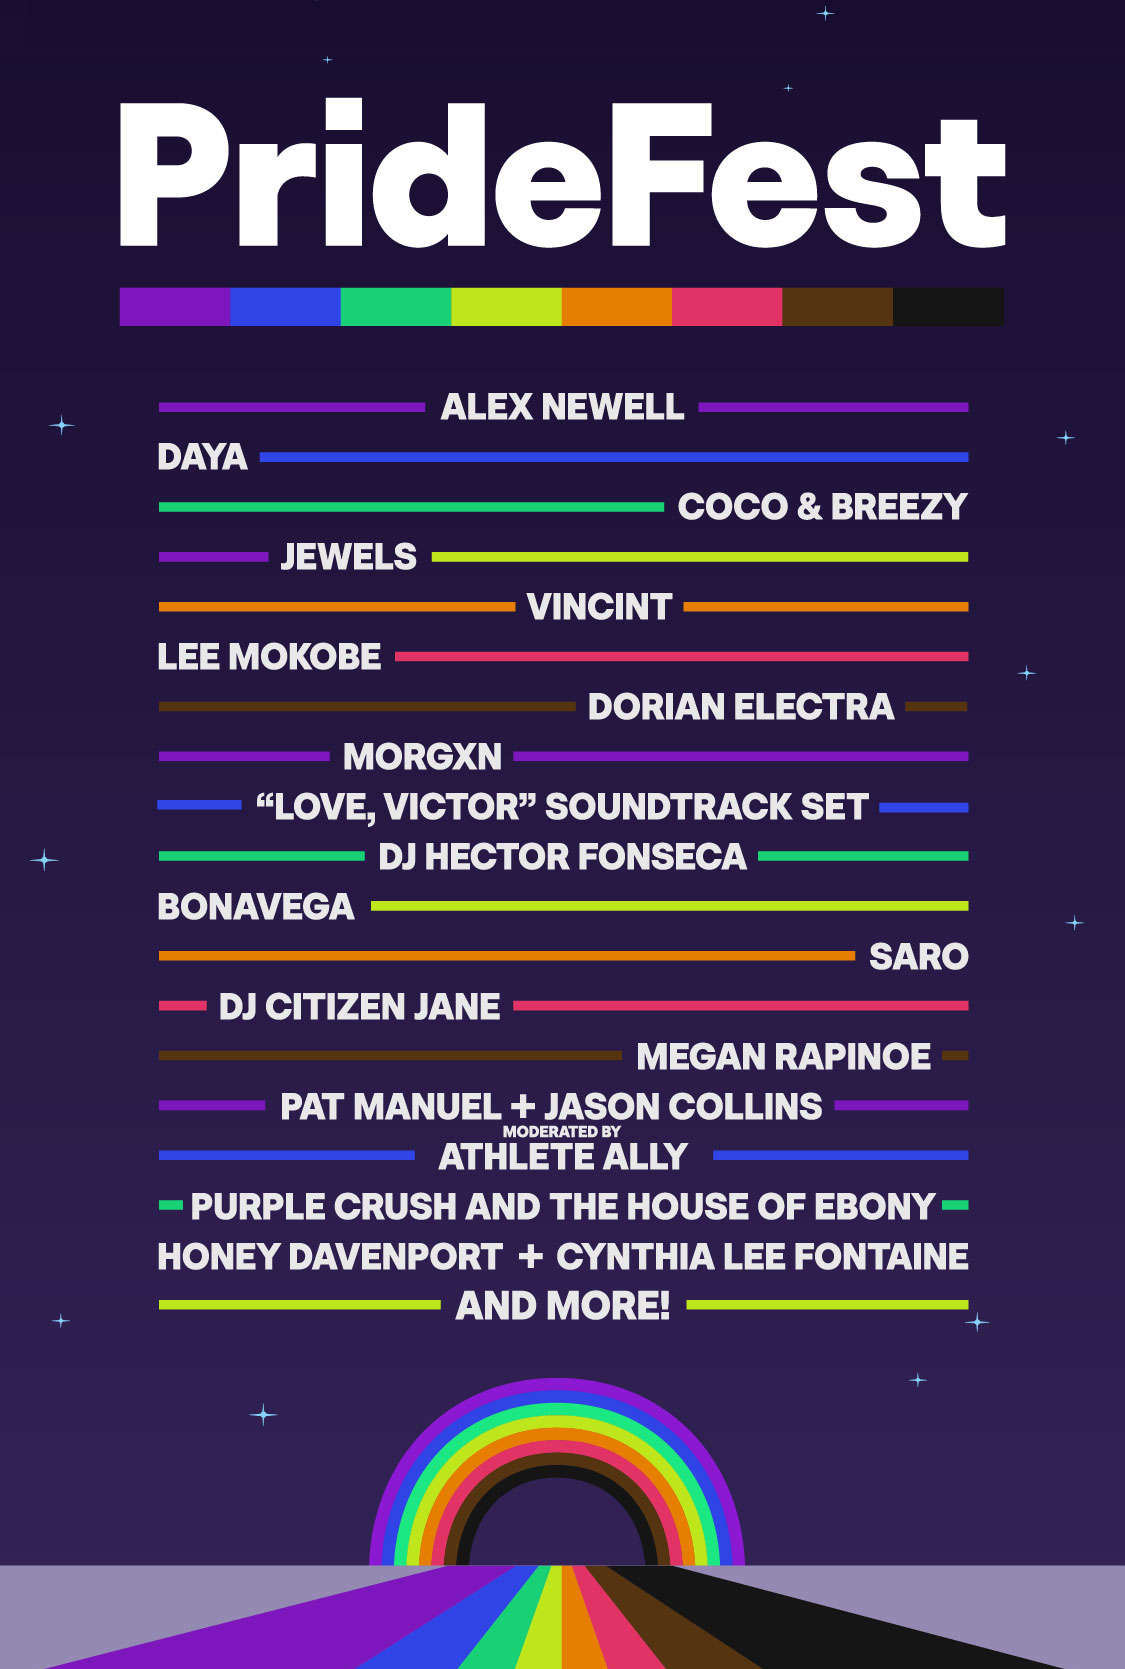 PrideFest Lineup